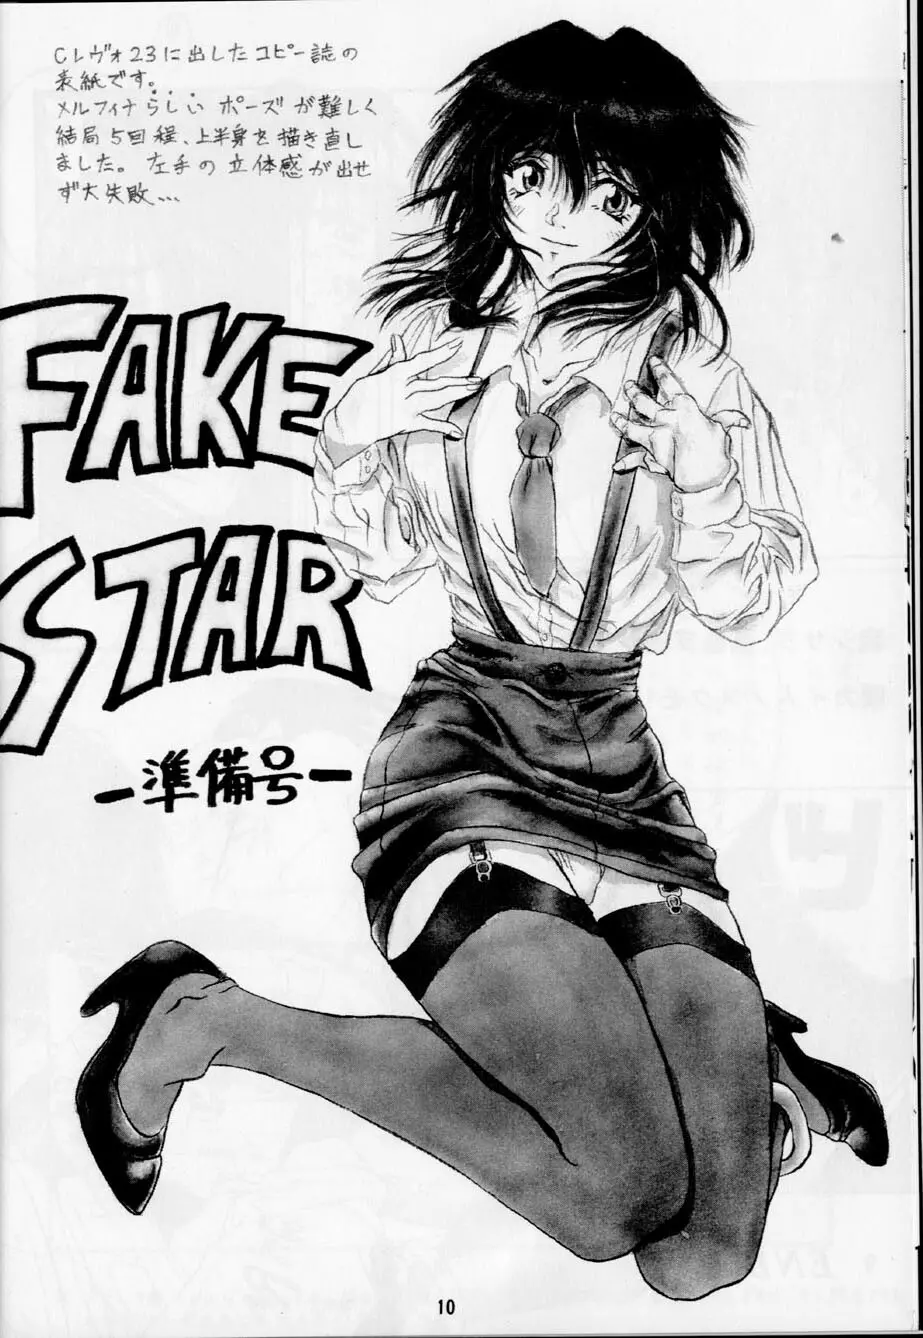 FAKE STAR - page9